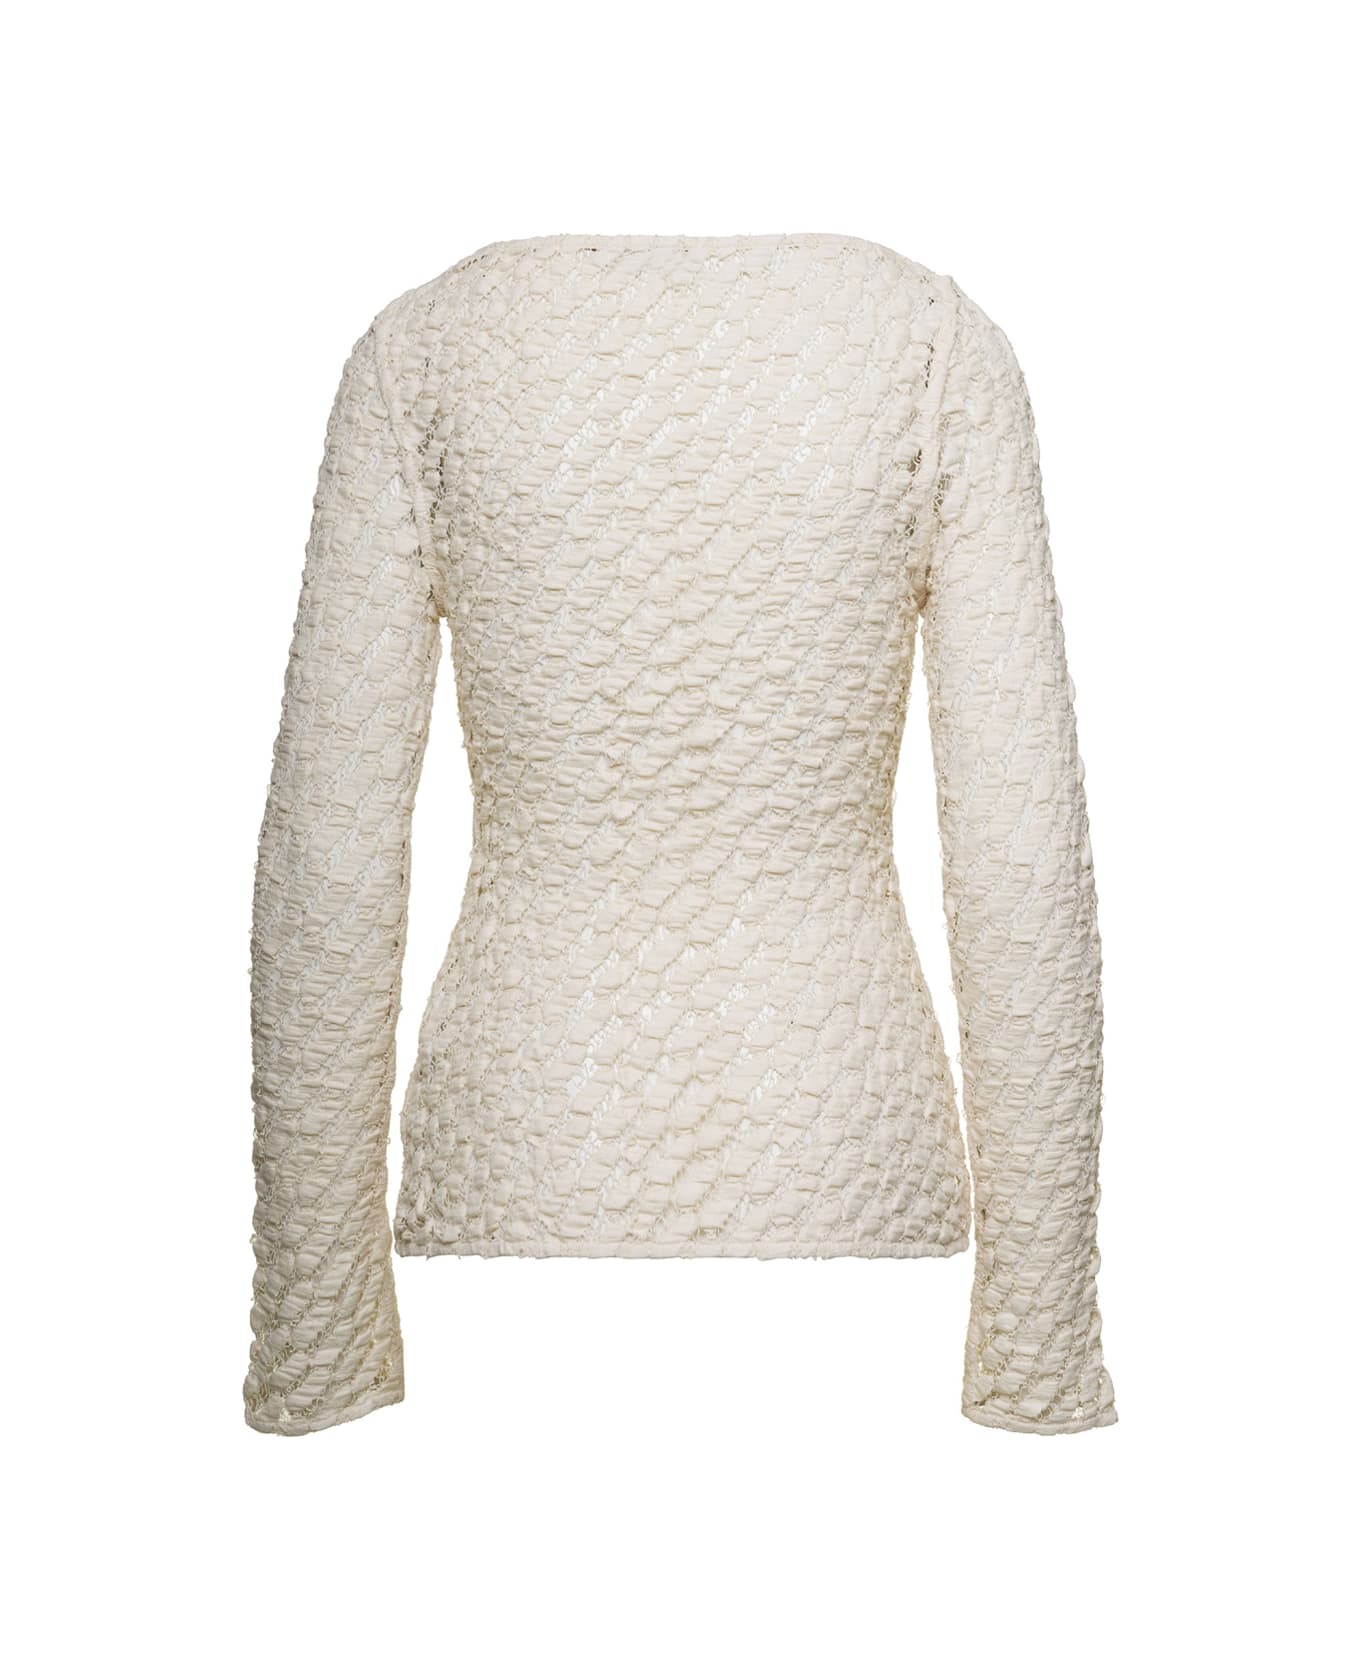 Róhe Beige Sweater With Boat Neckline In Cotton Blend Woman - Beige